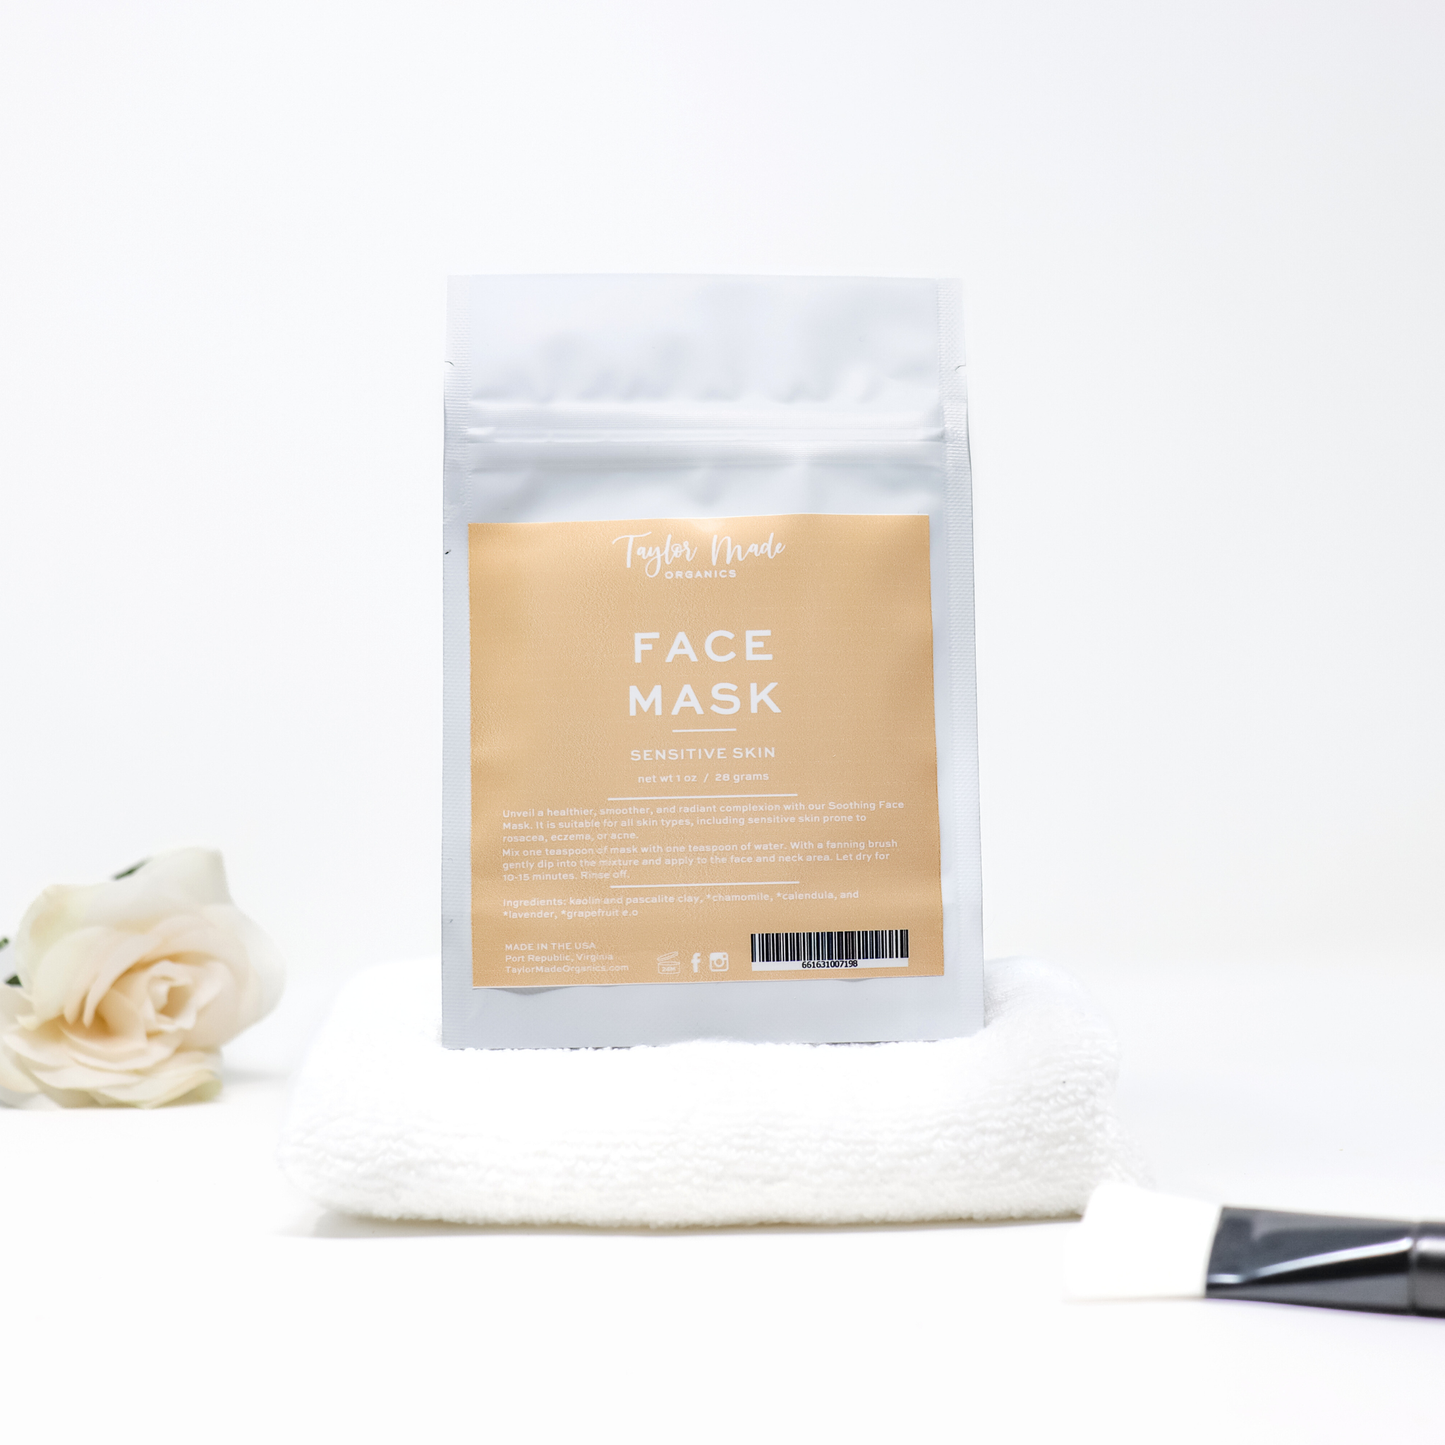 Face Mask - Sensitive skin